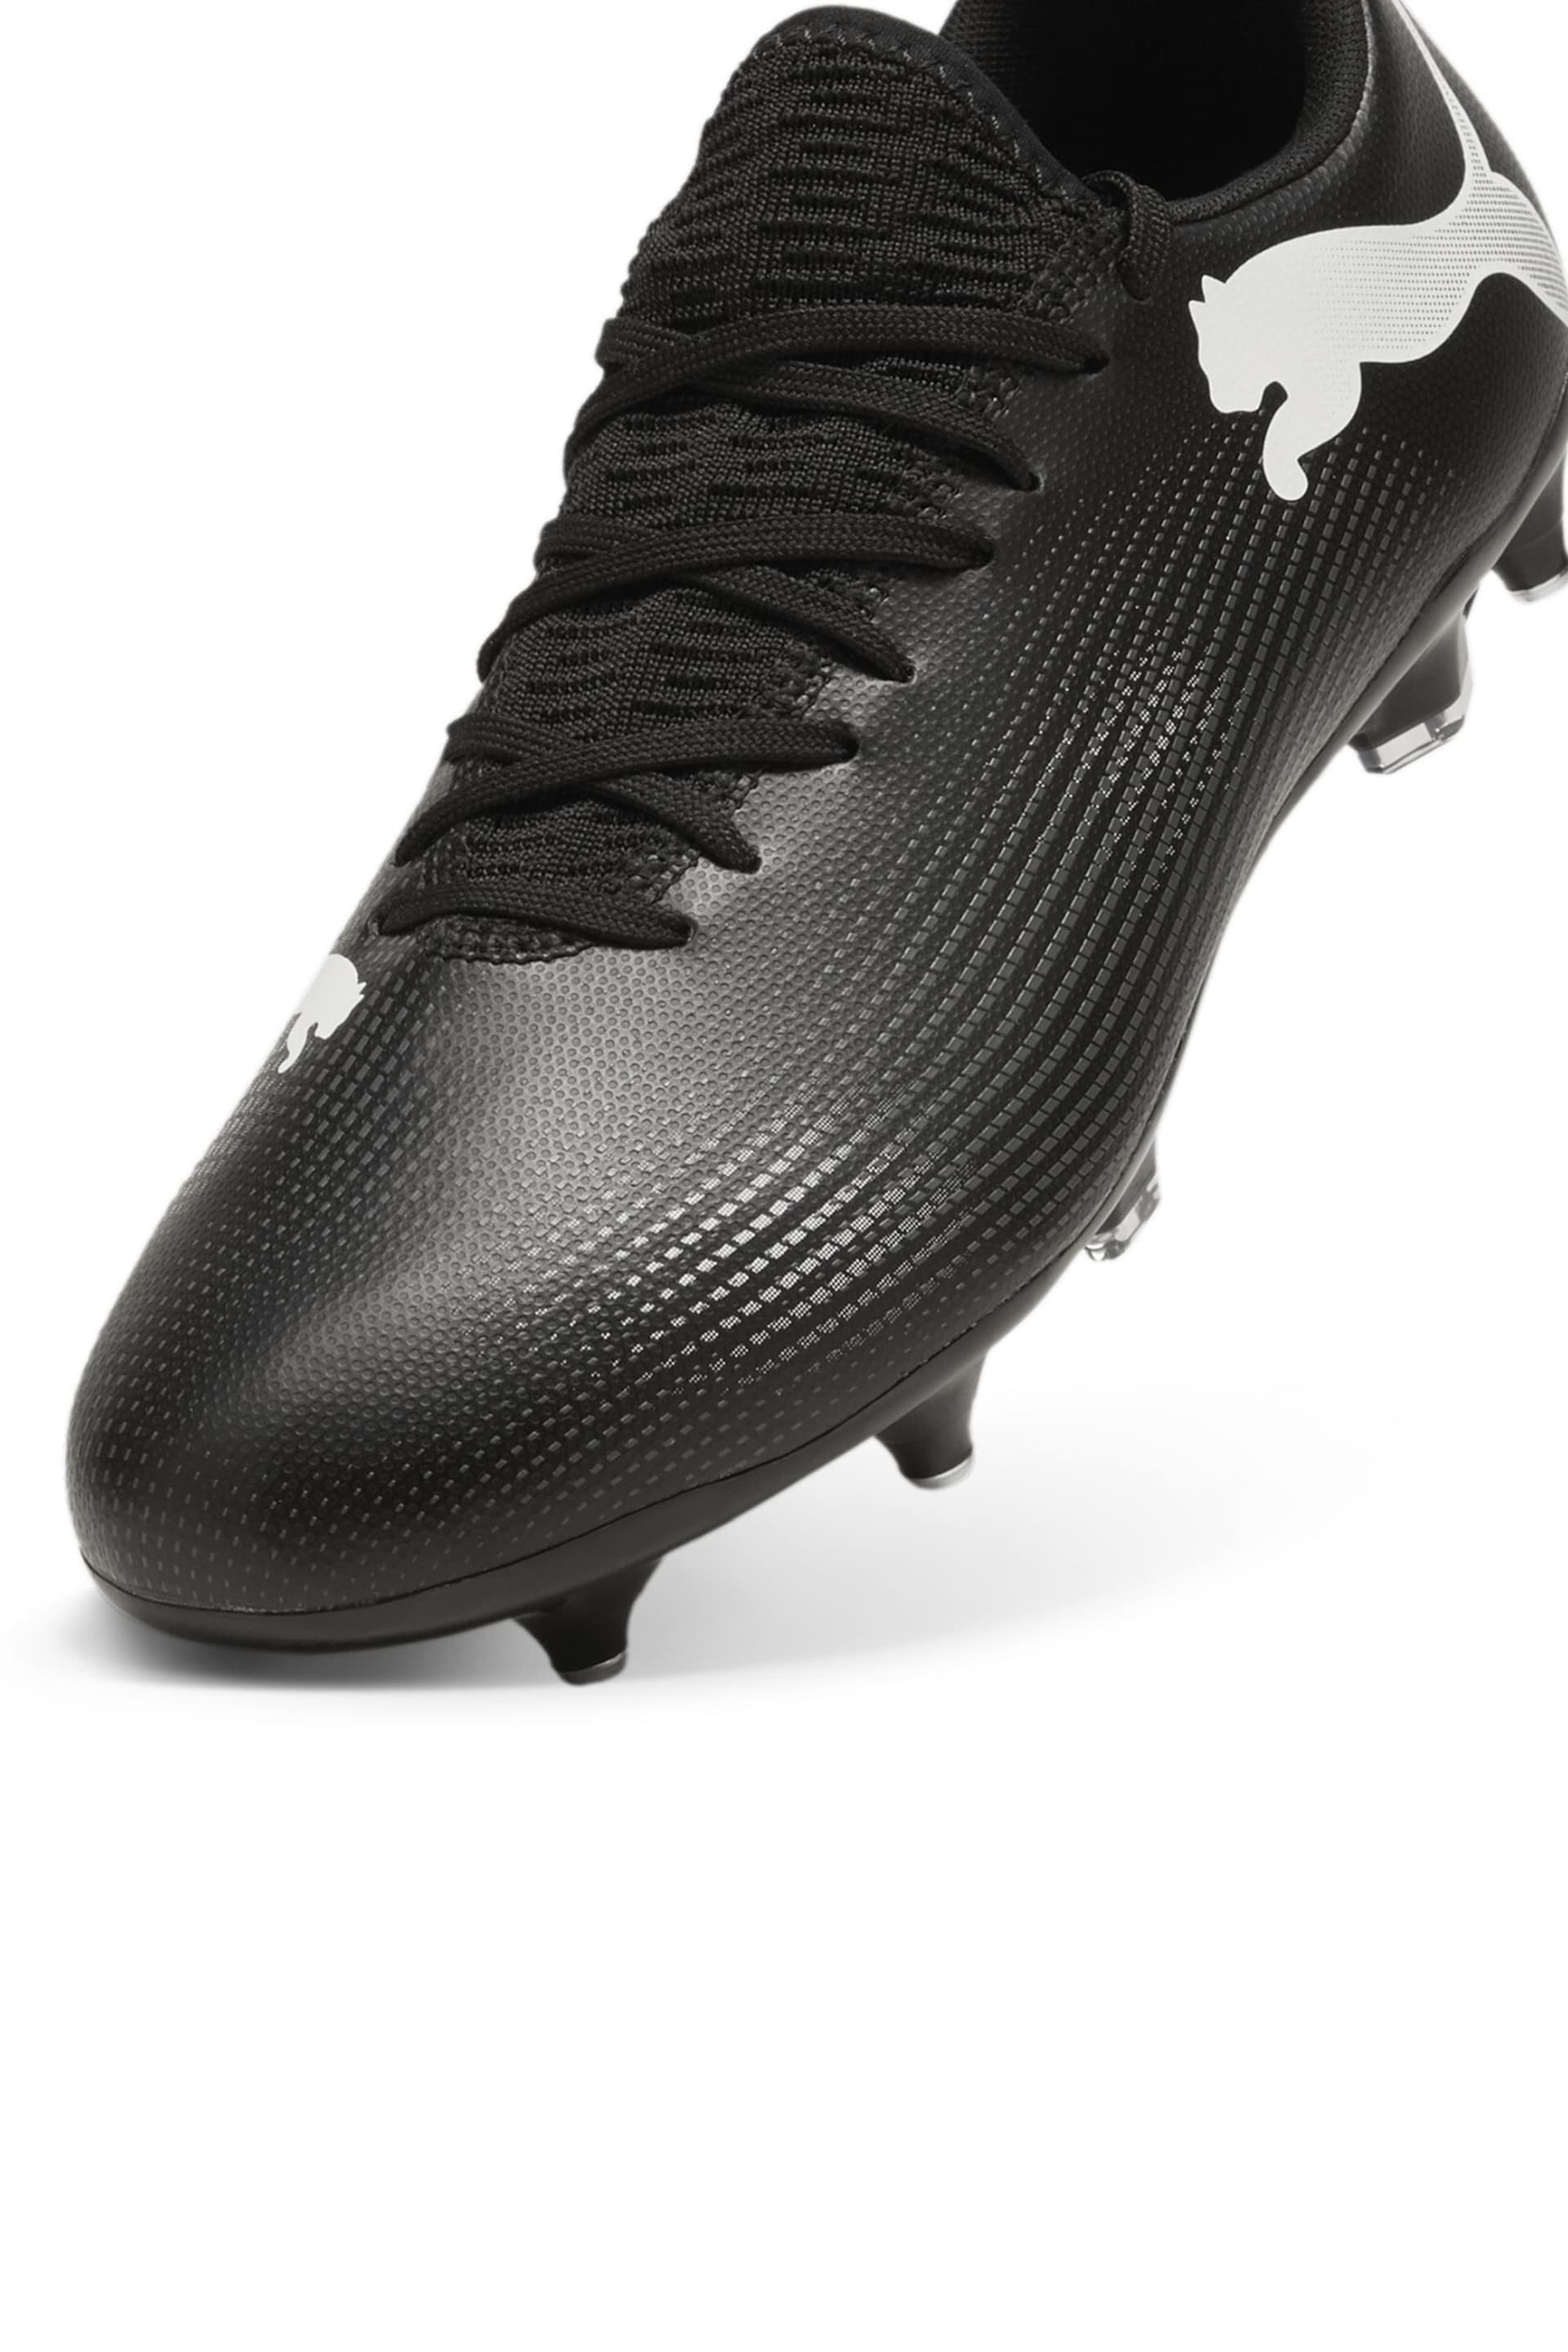 Puma Black FUTURE 7 PLAY MxSG Mens Football Boots - Image 6 of 6